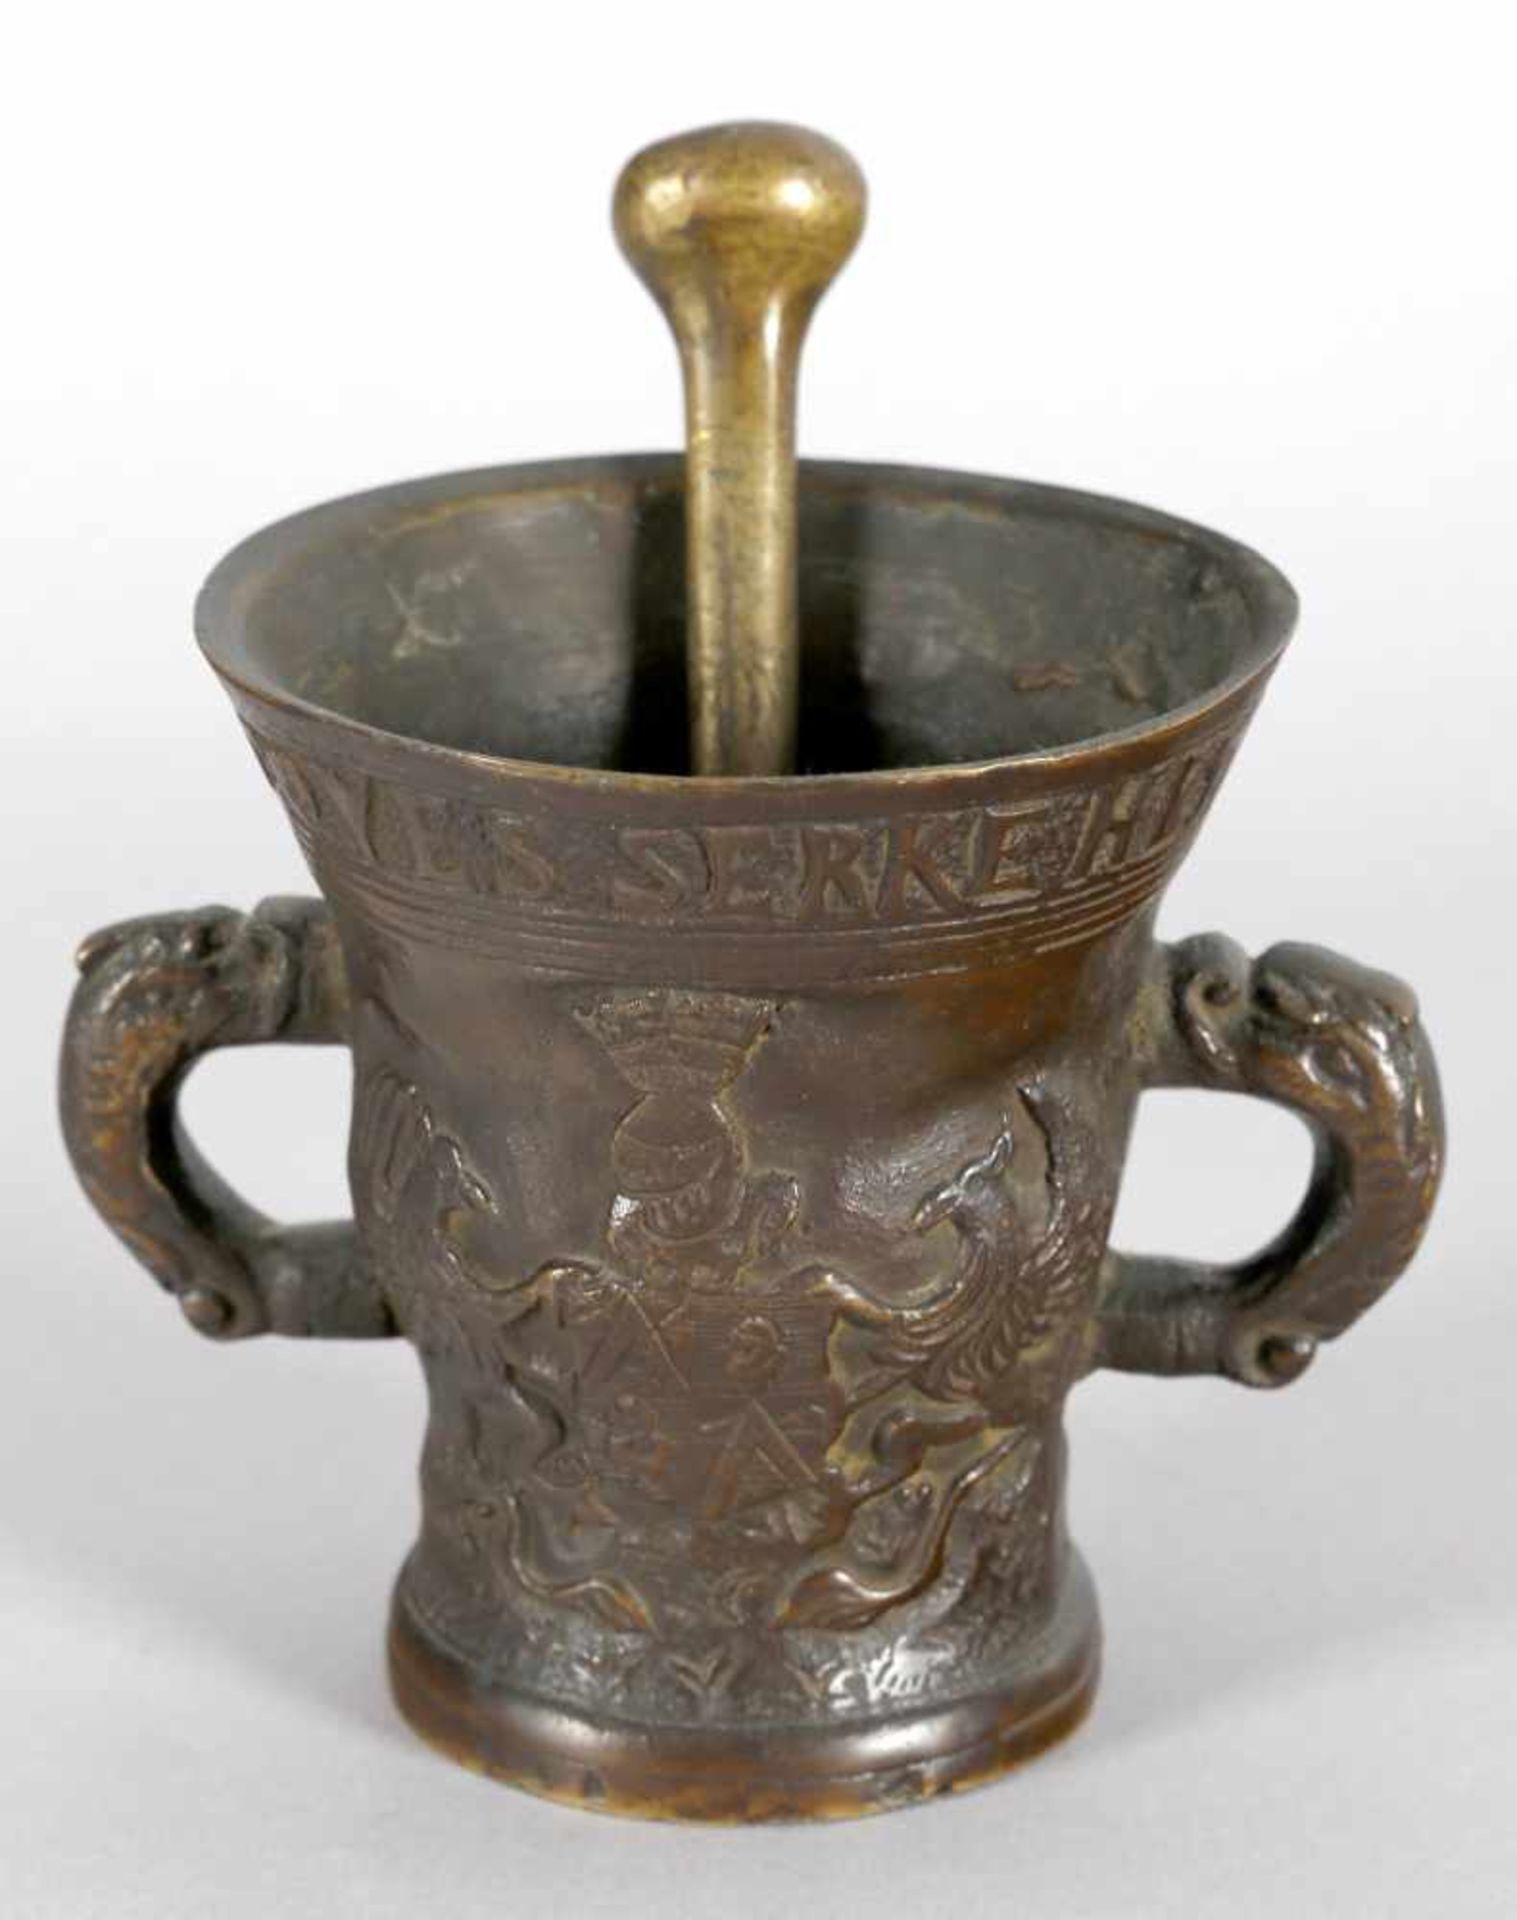 Mörser aus Bronze, Niederlande, 19. Jh., Historismuszwischen den Henkelgriffen Wappenreliefs am